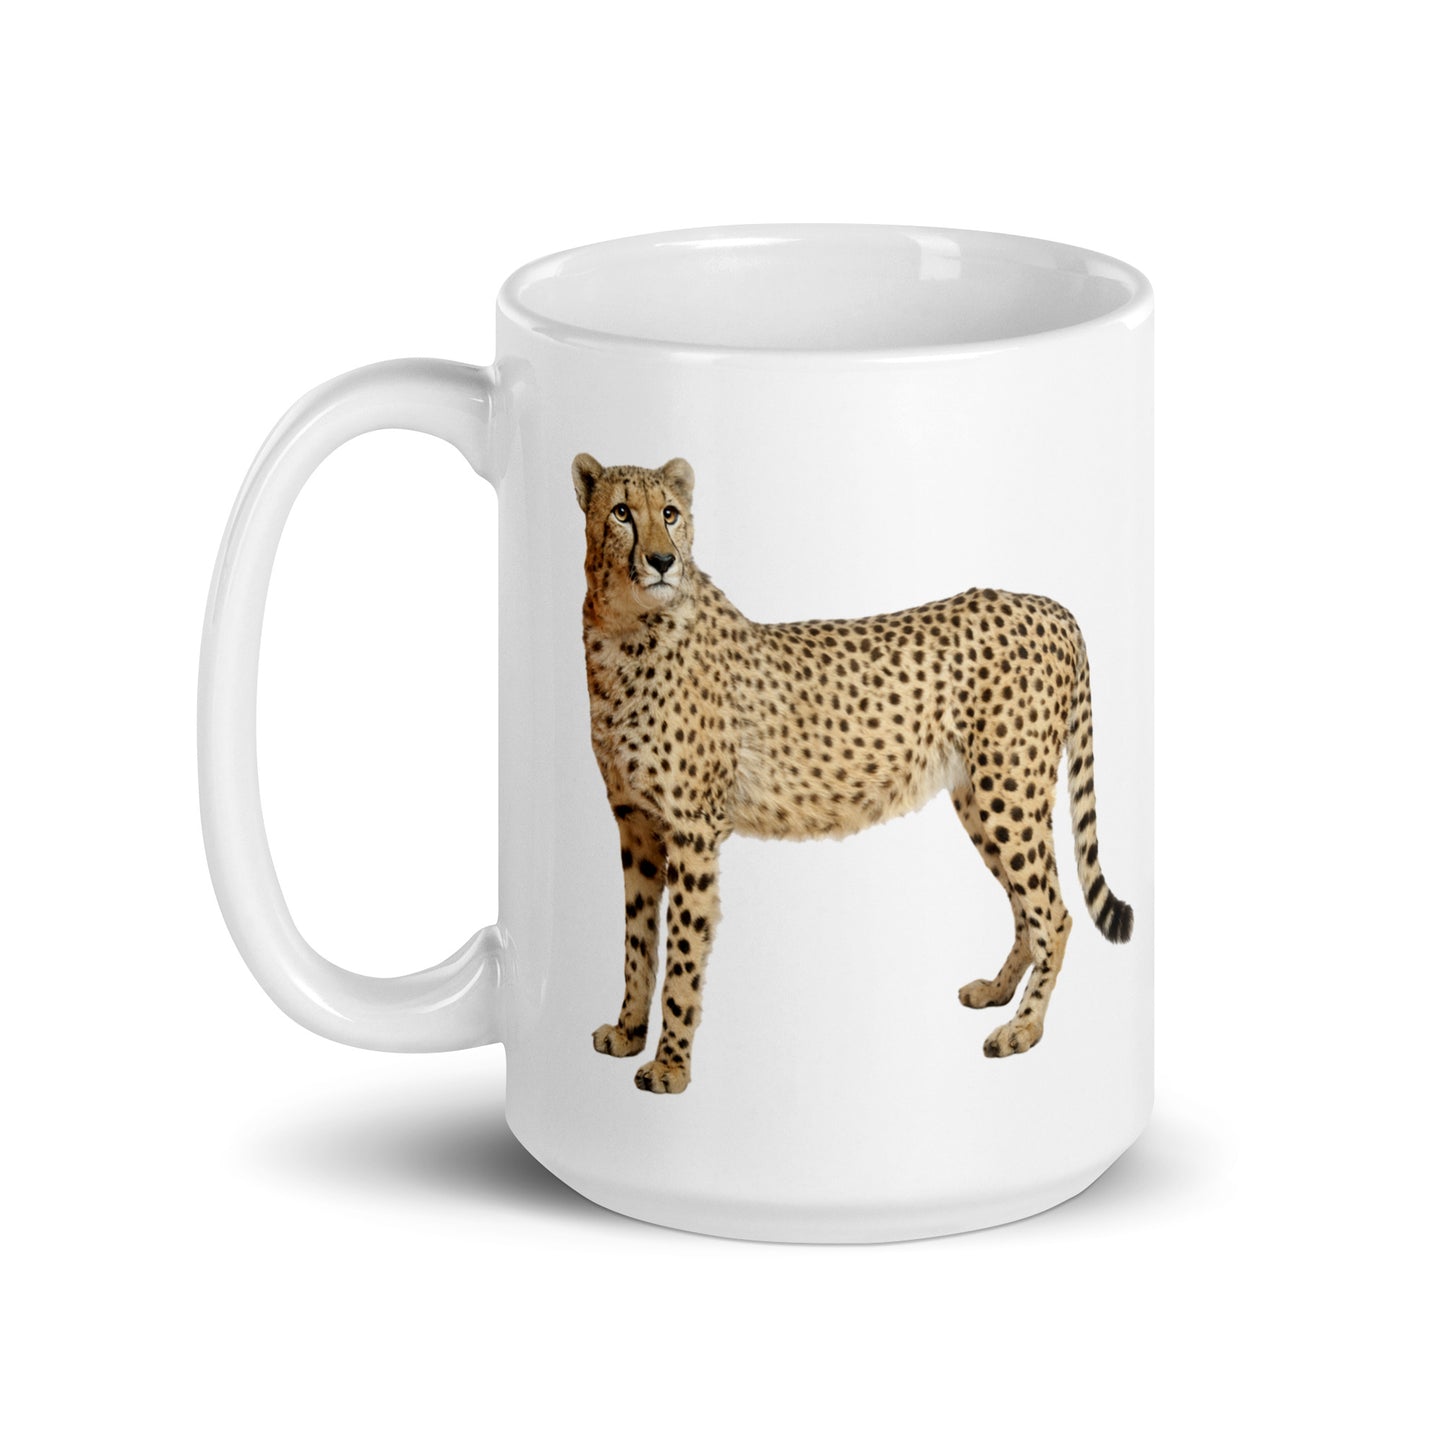 White Glossy Mug printed with a Cheetah